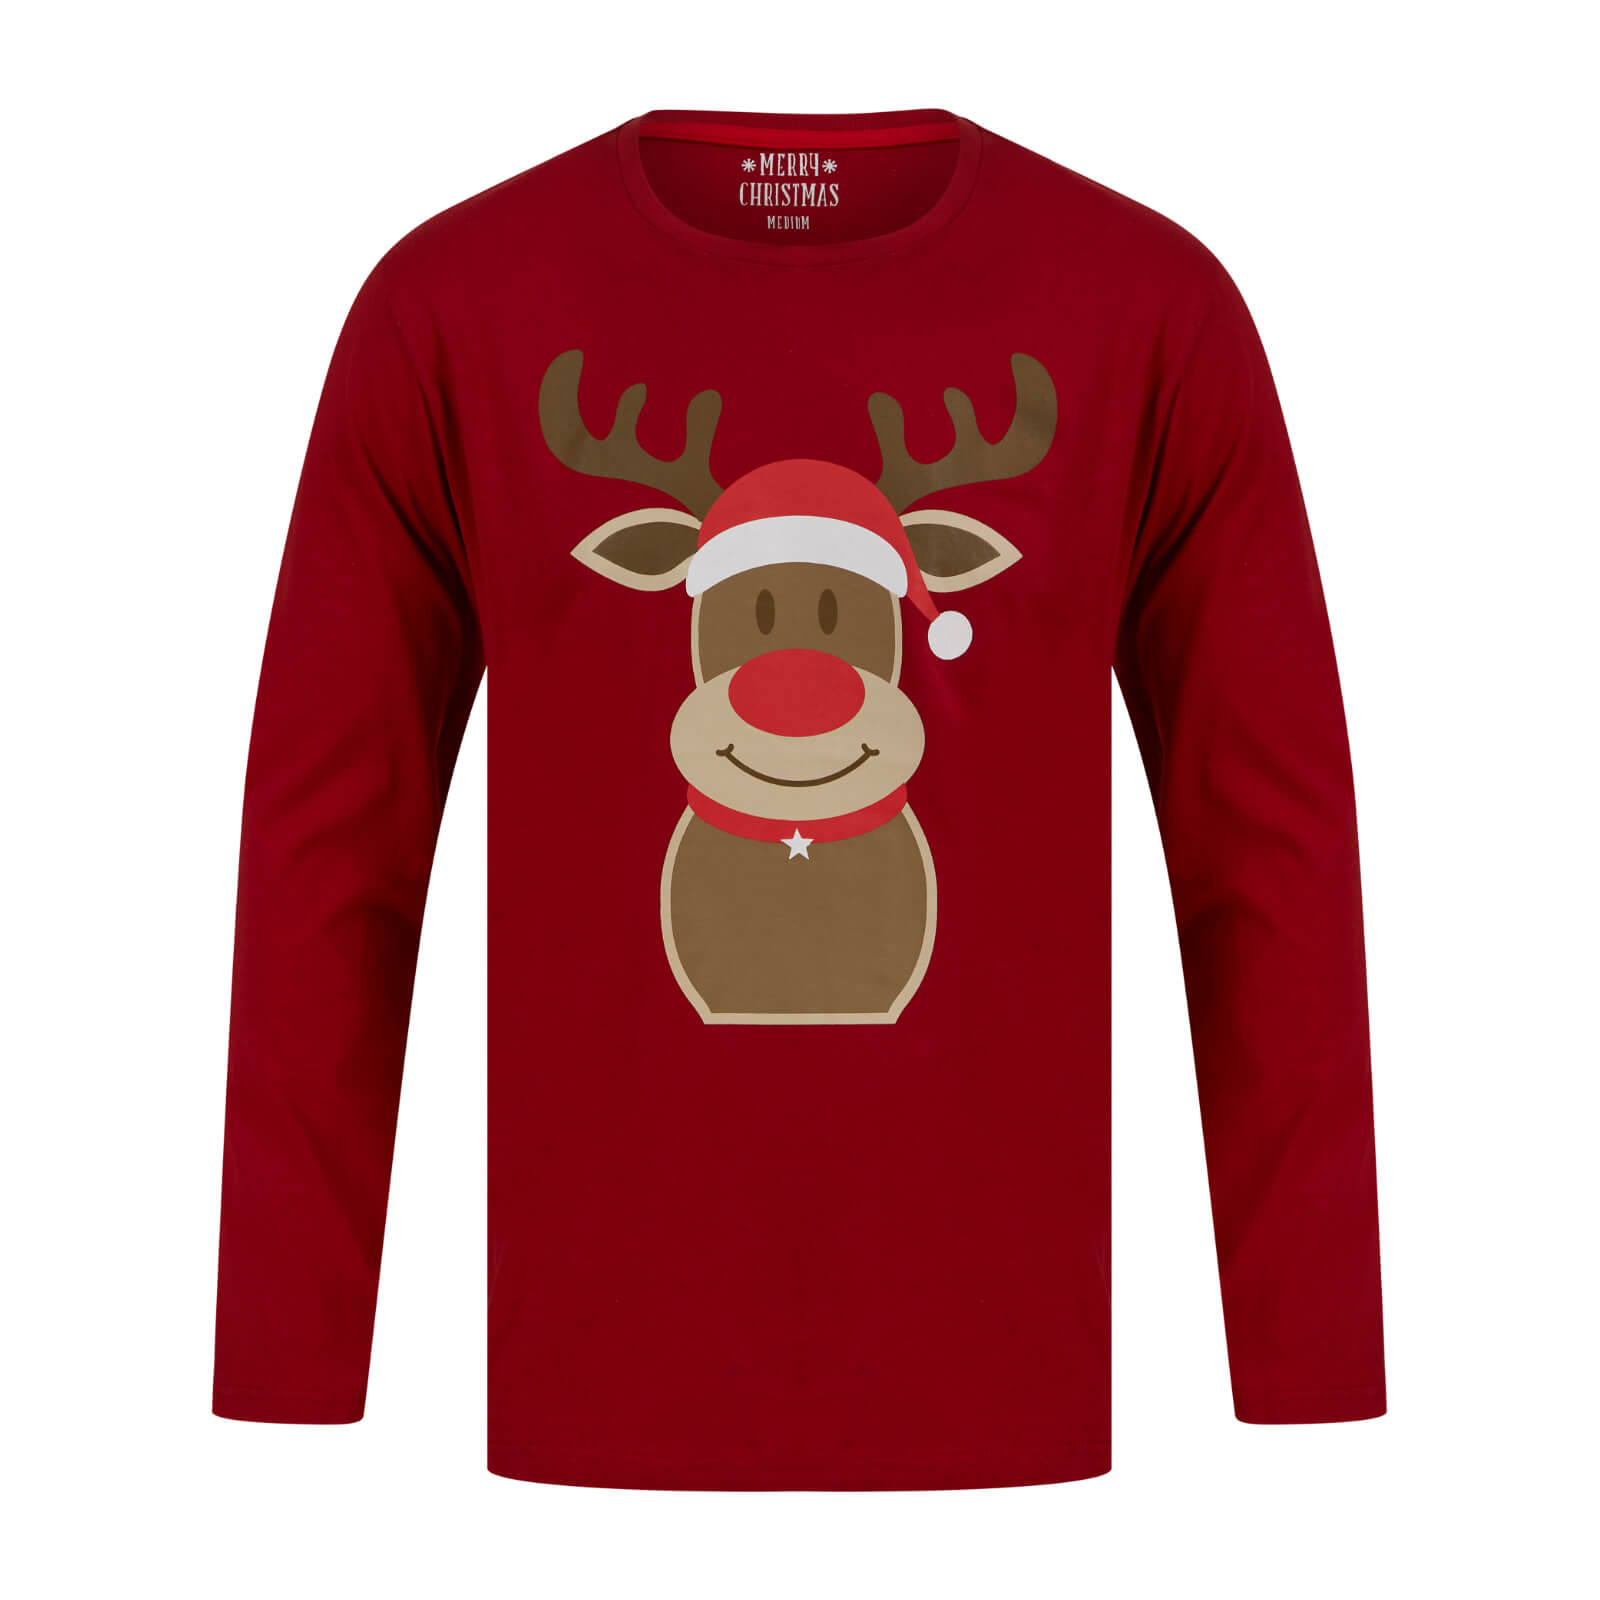 Mr Crimbo Kids Christmas Pyjama Set Rudolph Print Top Red Navy - MrCrimbo.co.uk -SRG2Q17459_F - Red/Navy -11-13